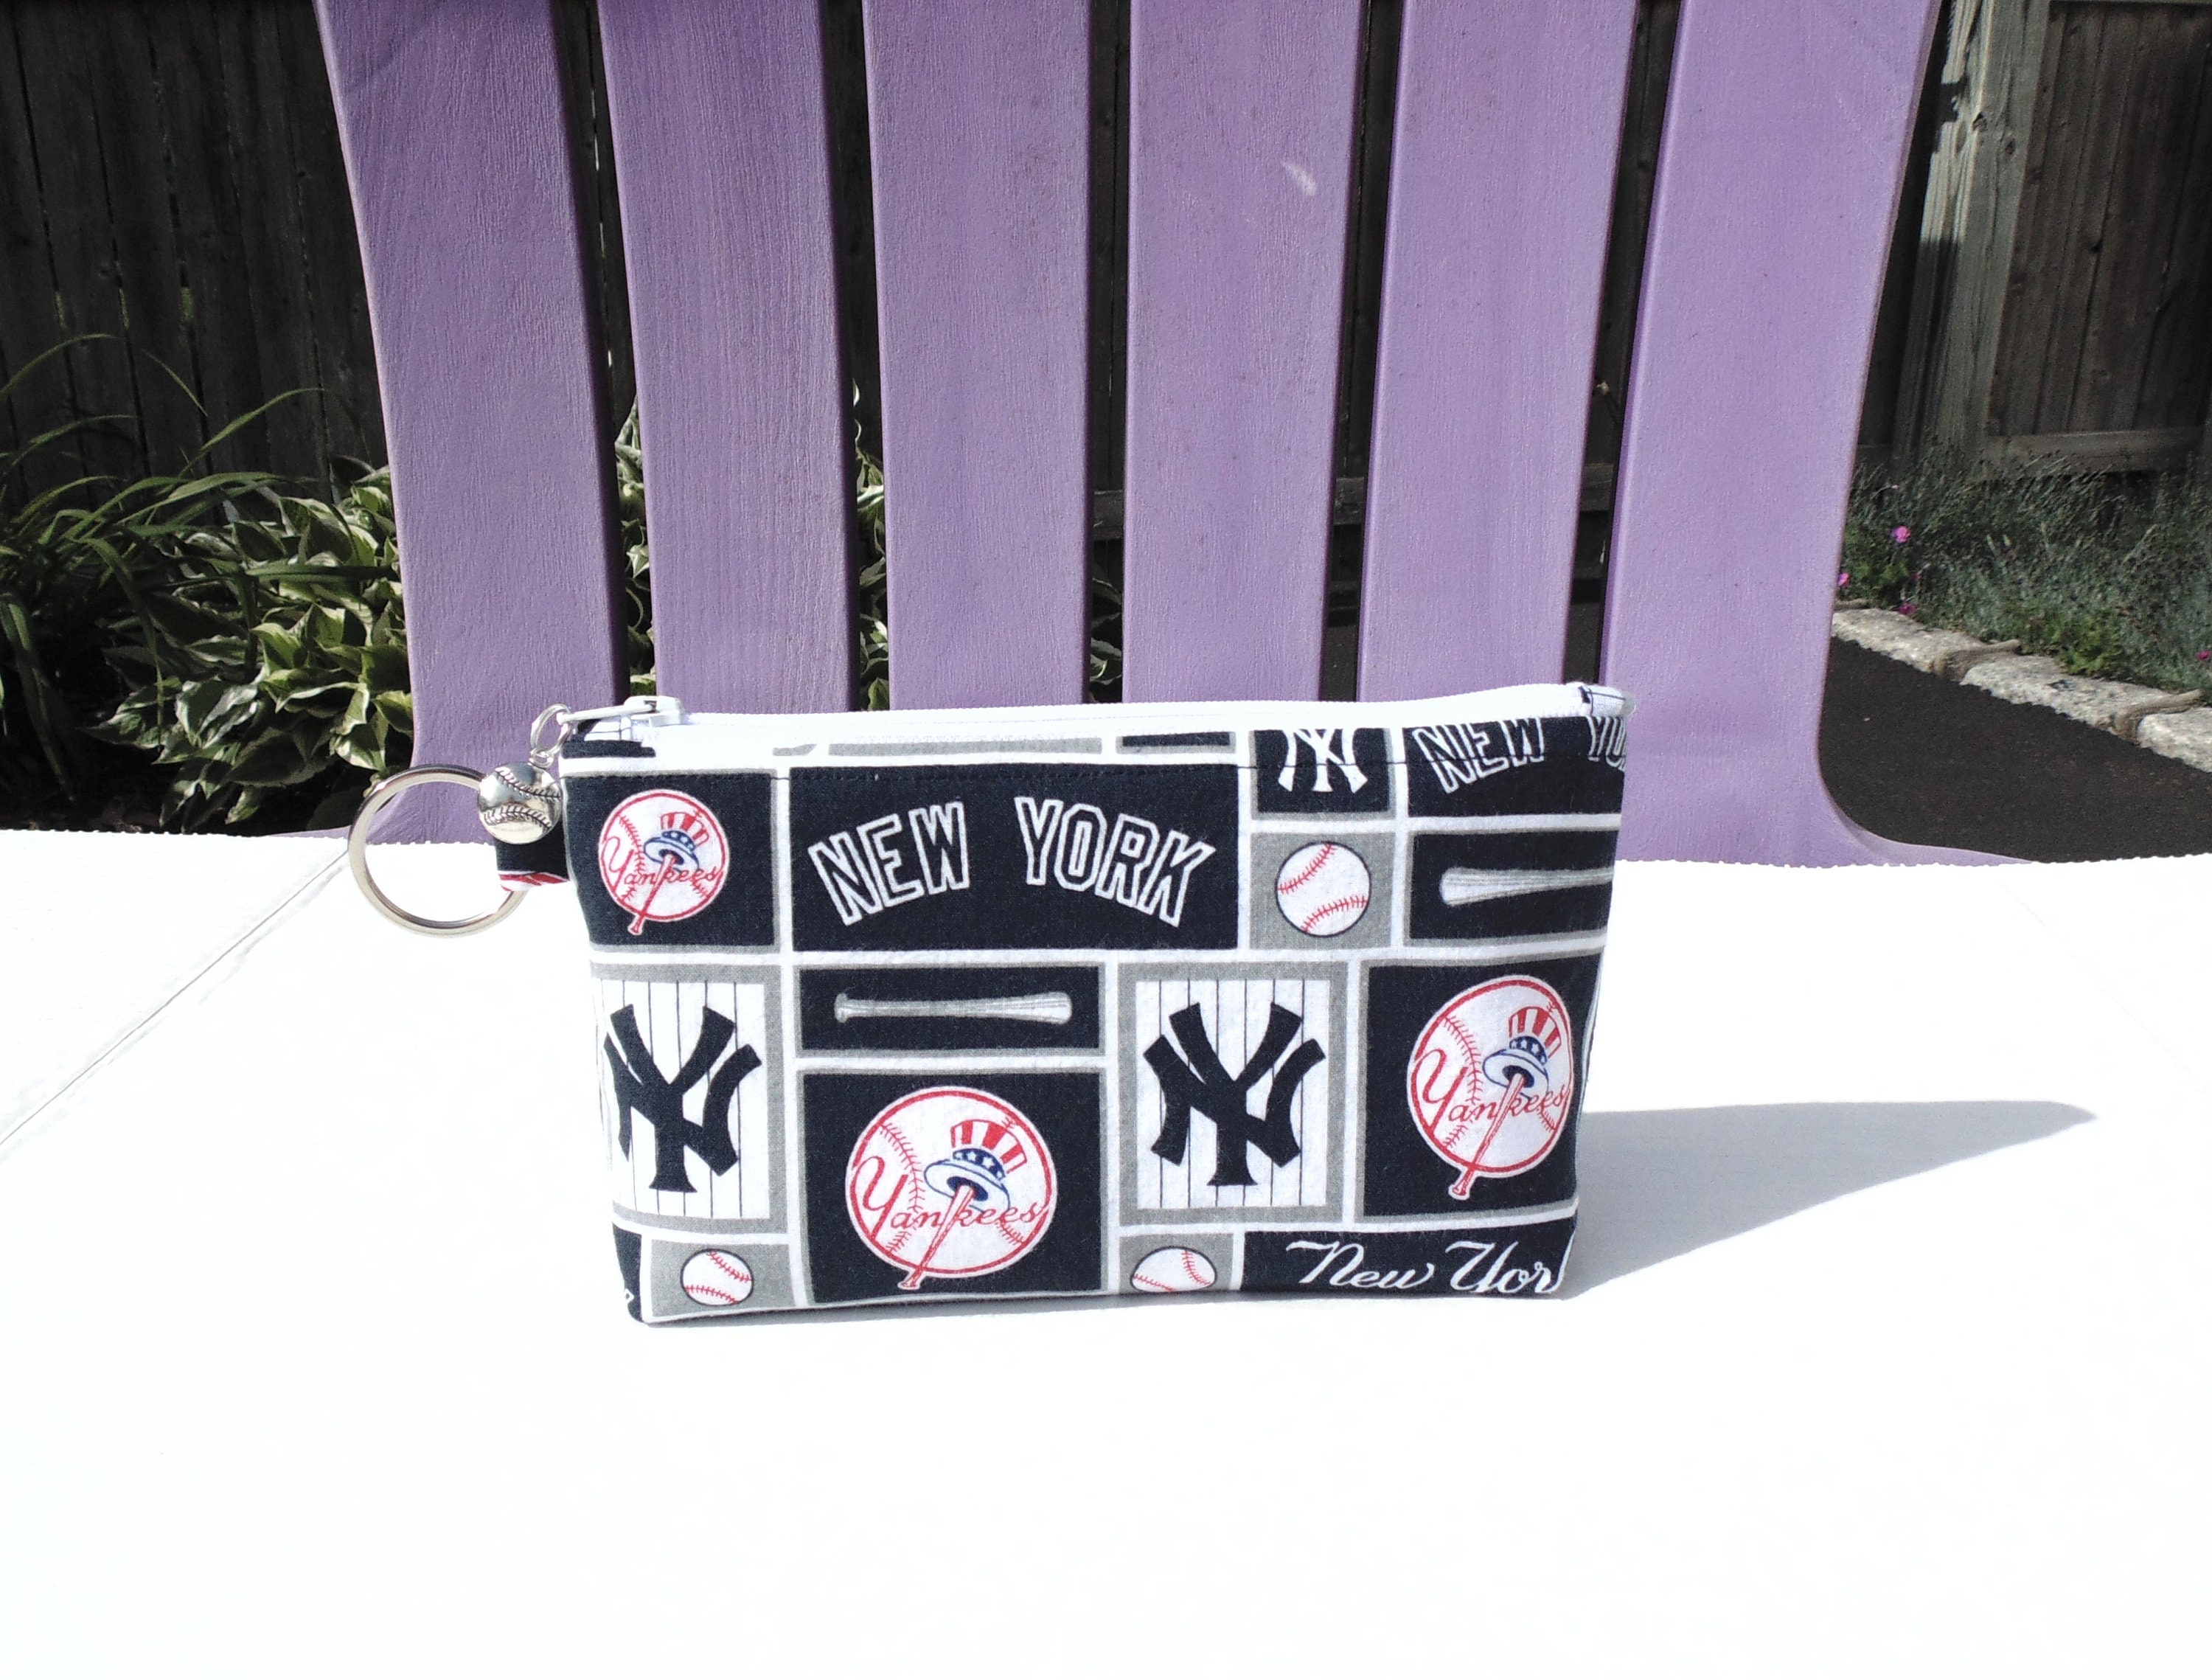 MLB NY Yankees Stadium Crossbody Bag with Pouch